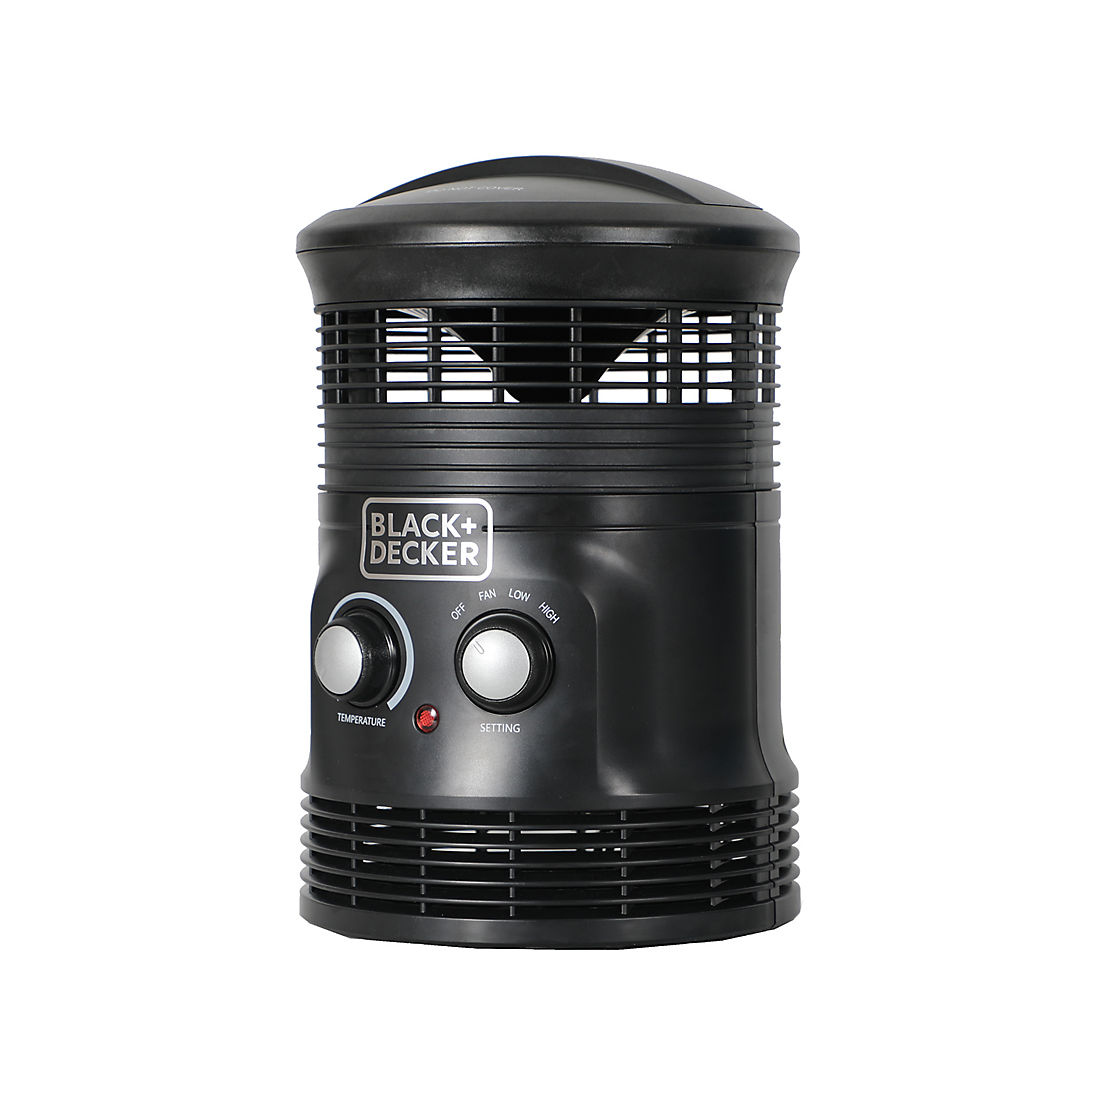  BLACK+DECKER Electric Heater, 360° Surround Portable